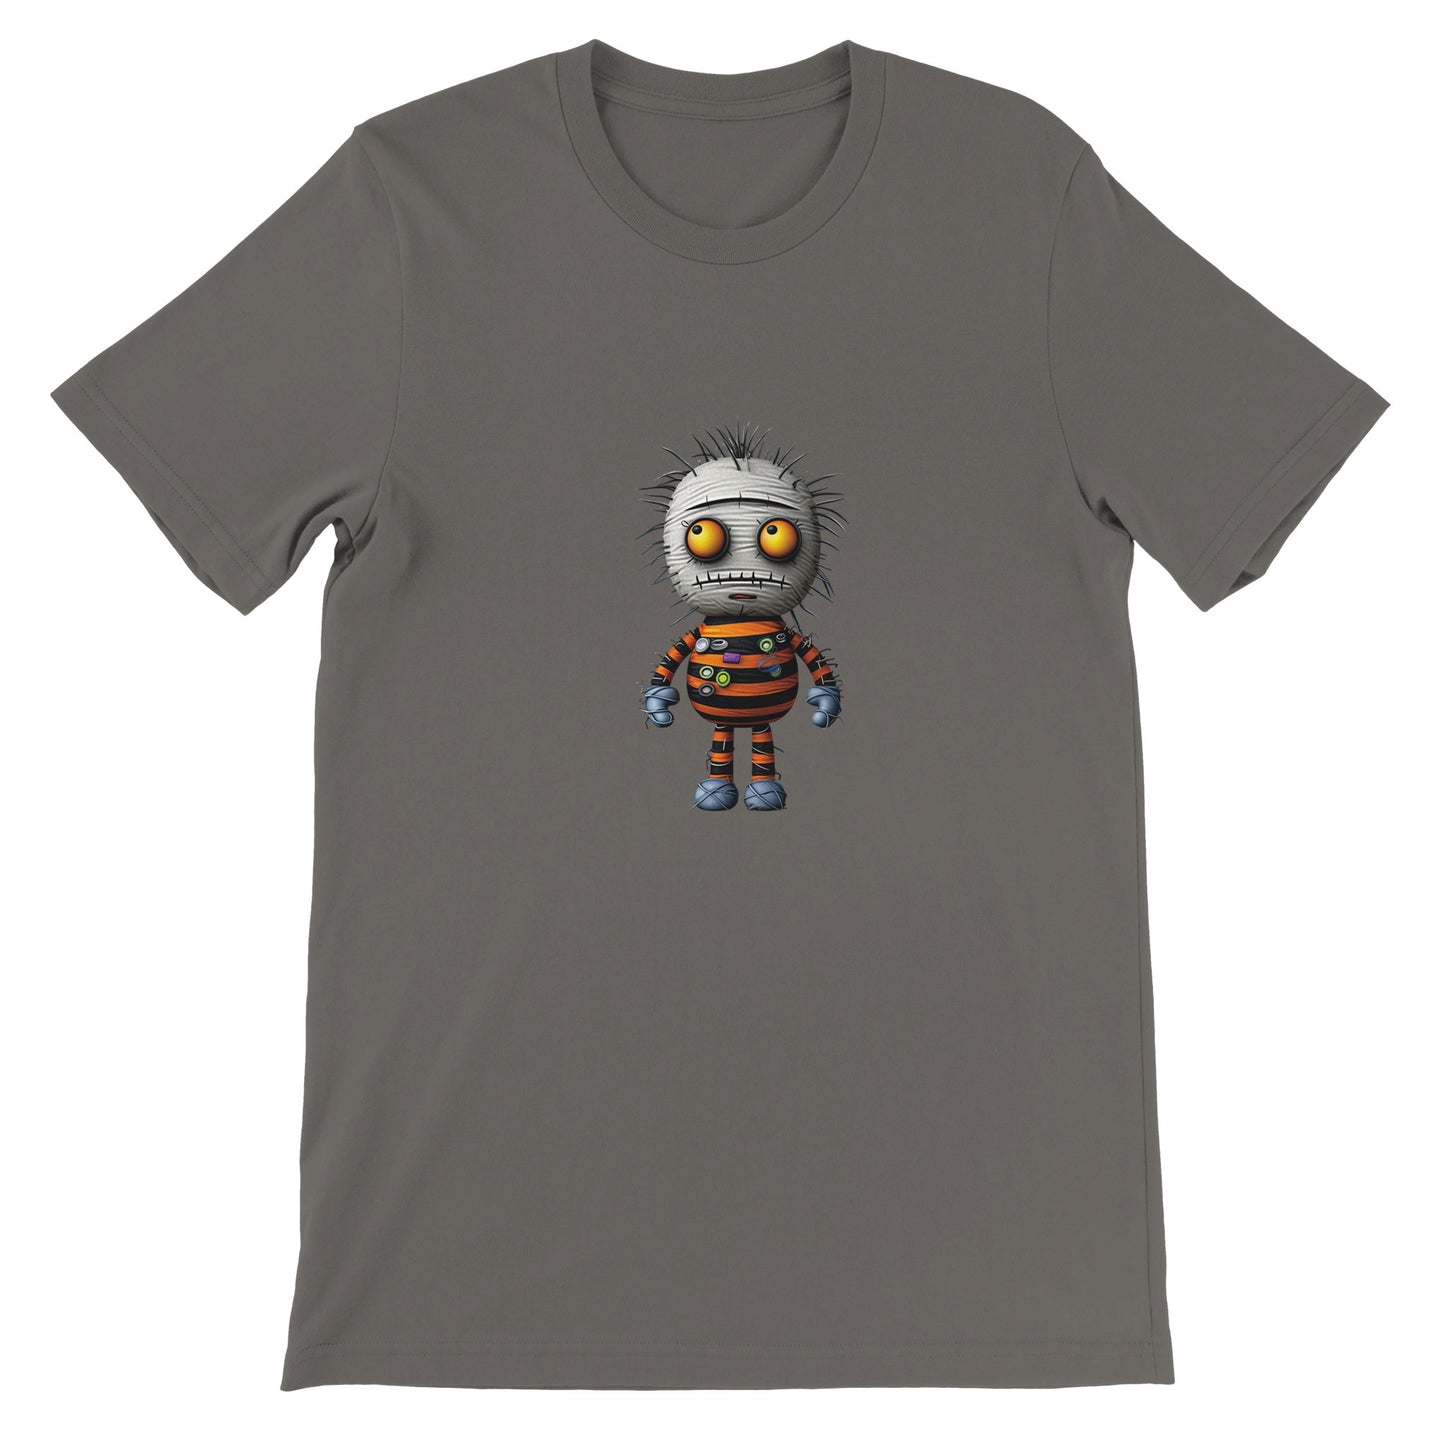 Budget Unisex Crewneck T-shirt/Funny-Spooky-Doll